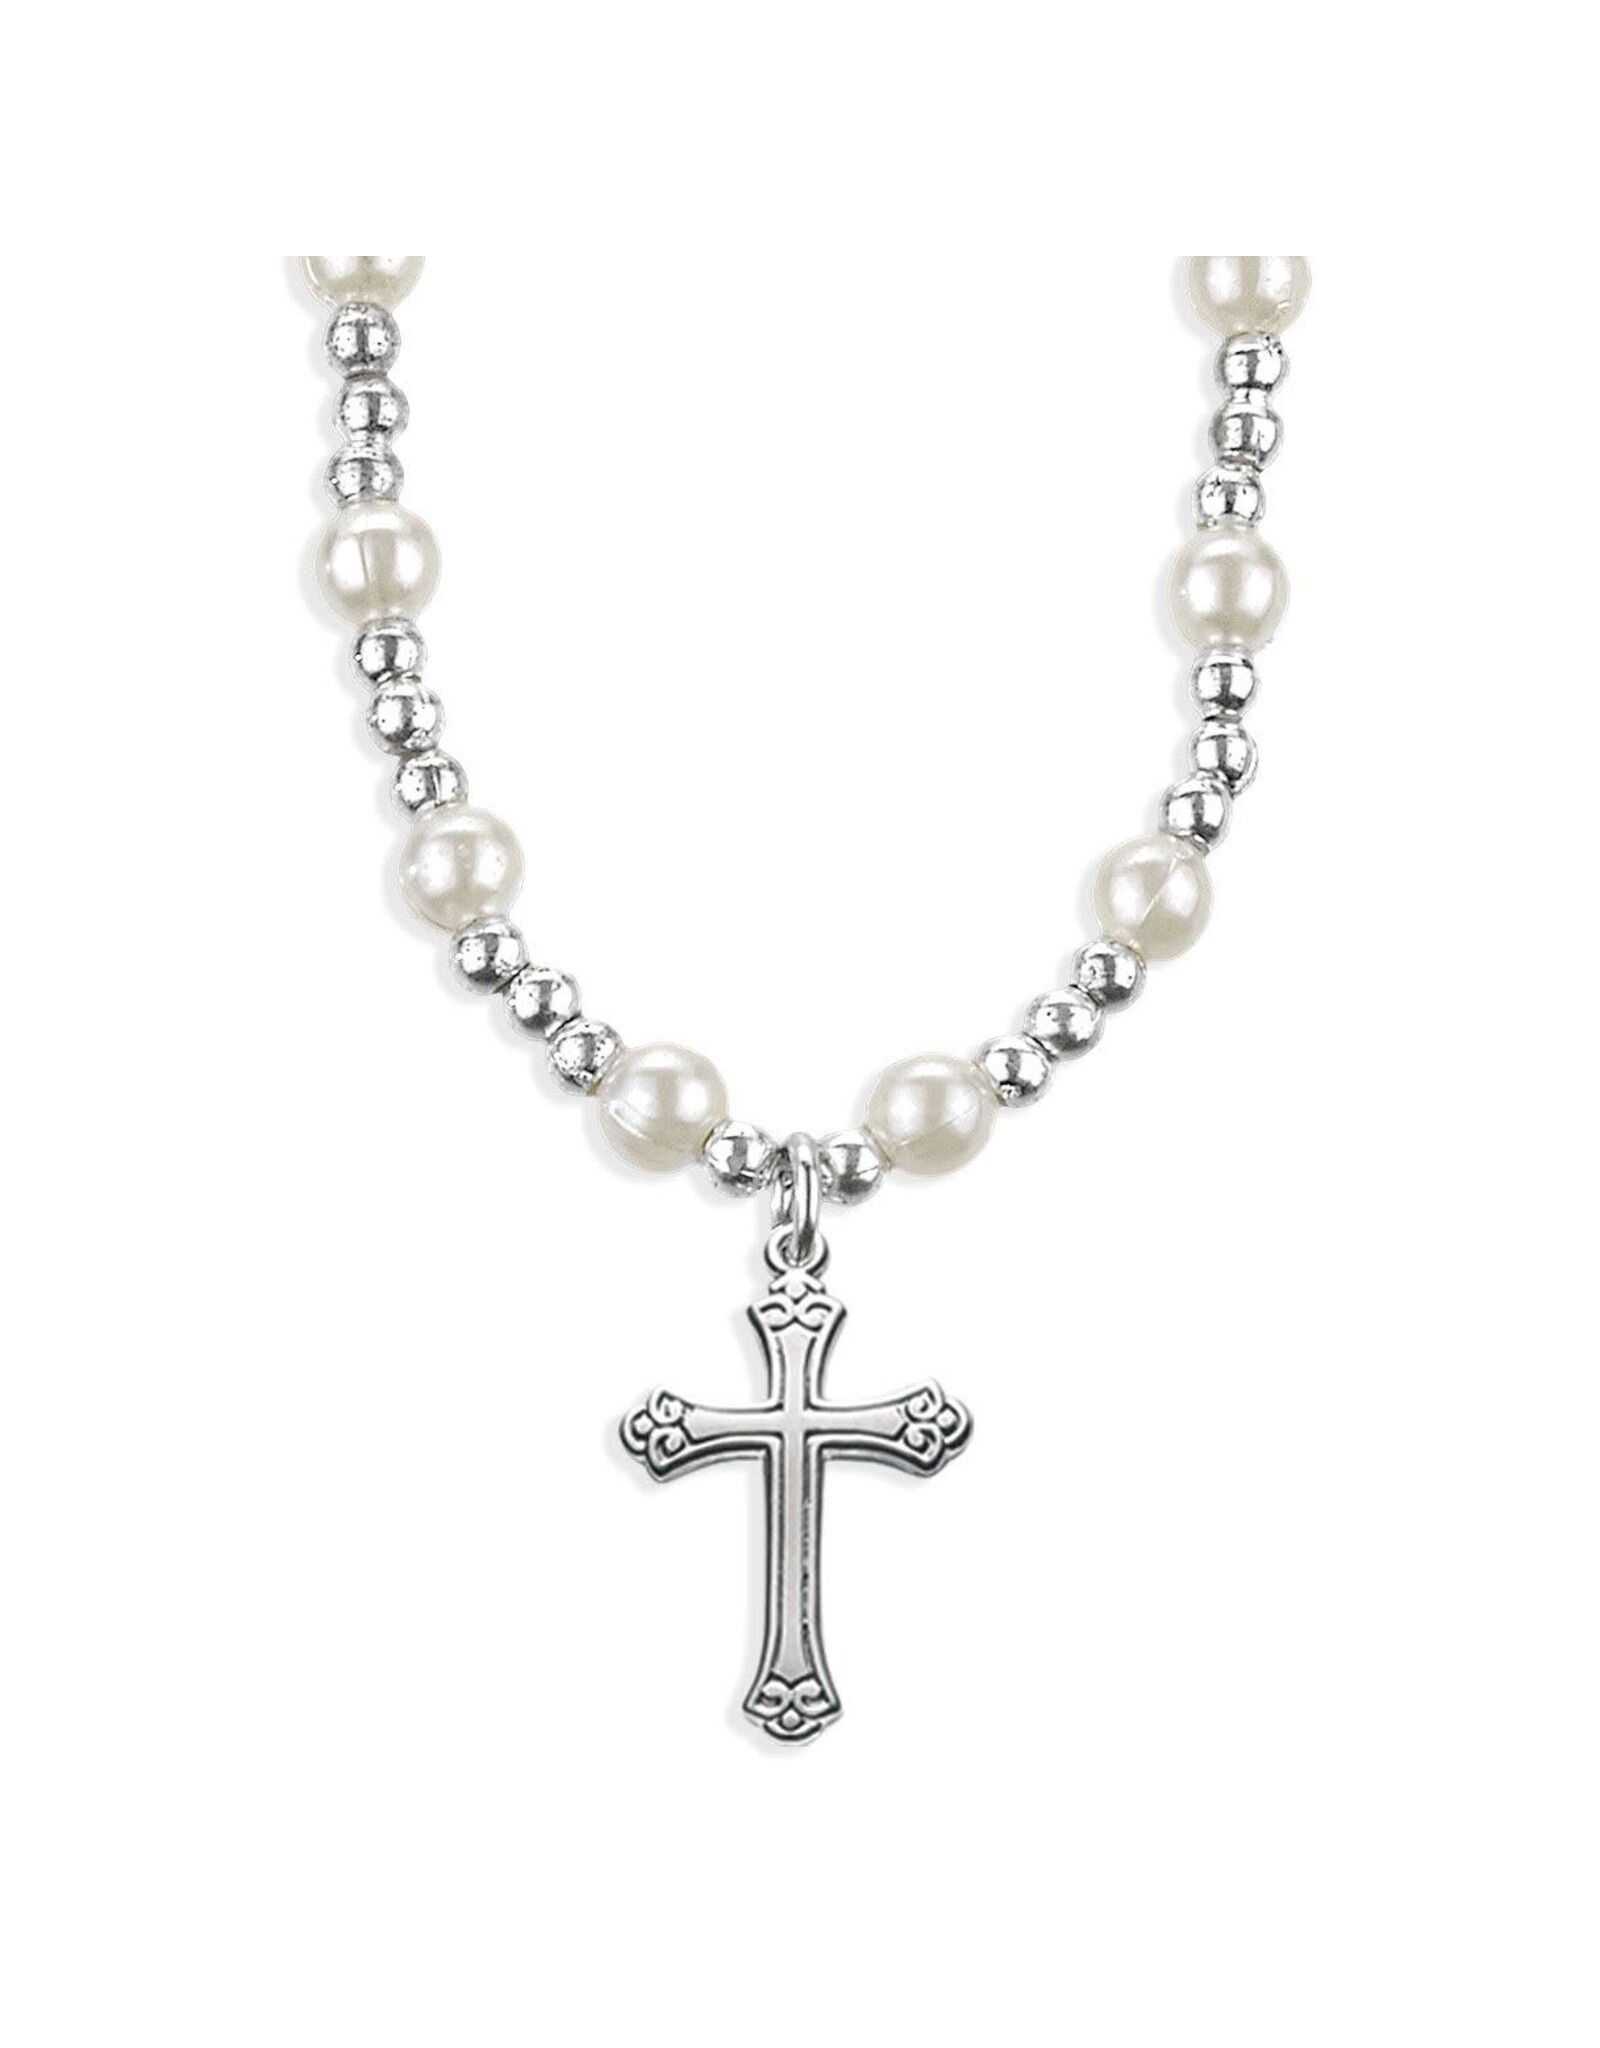 Hirten Pendant - Cross with White Pearl Beads